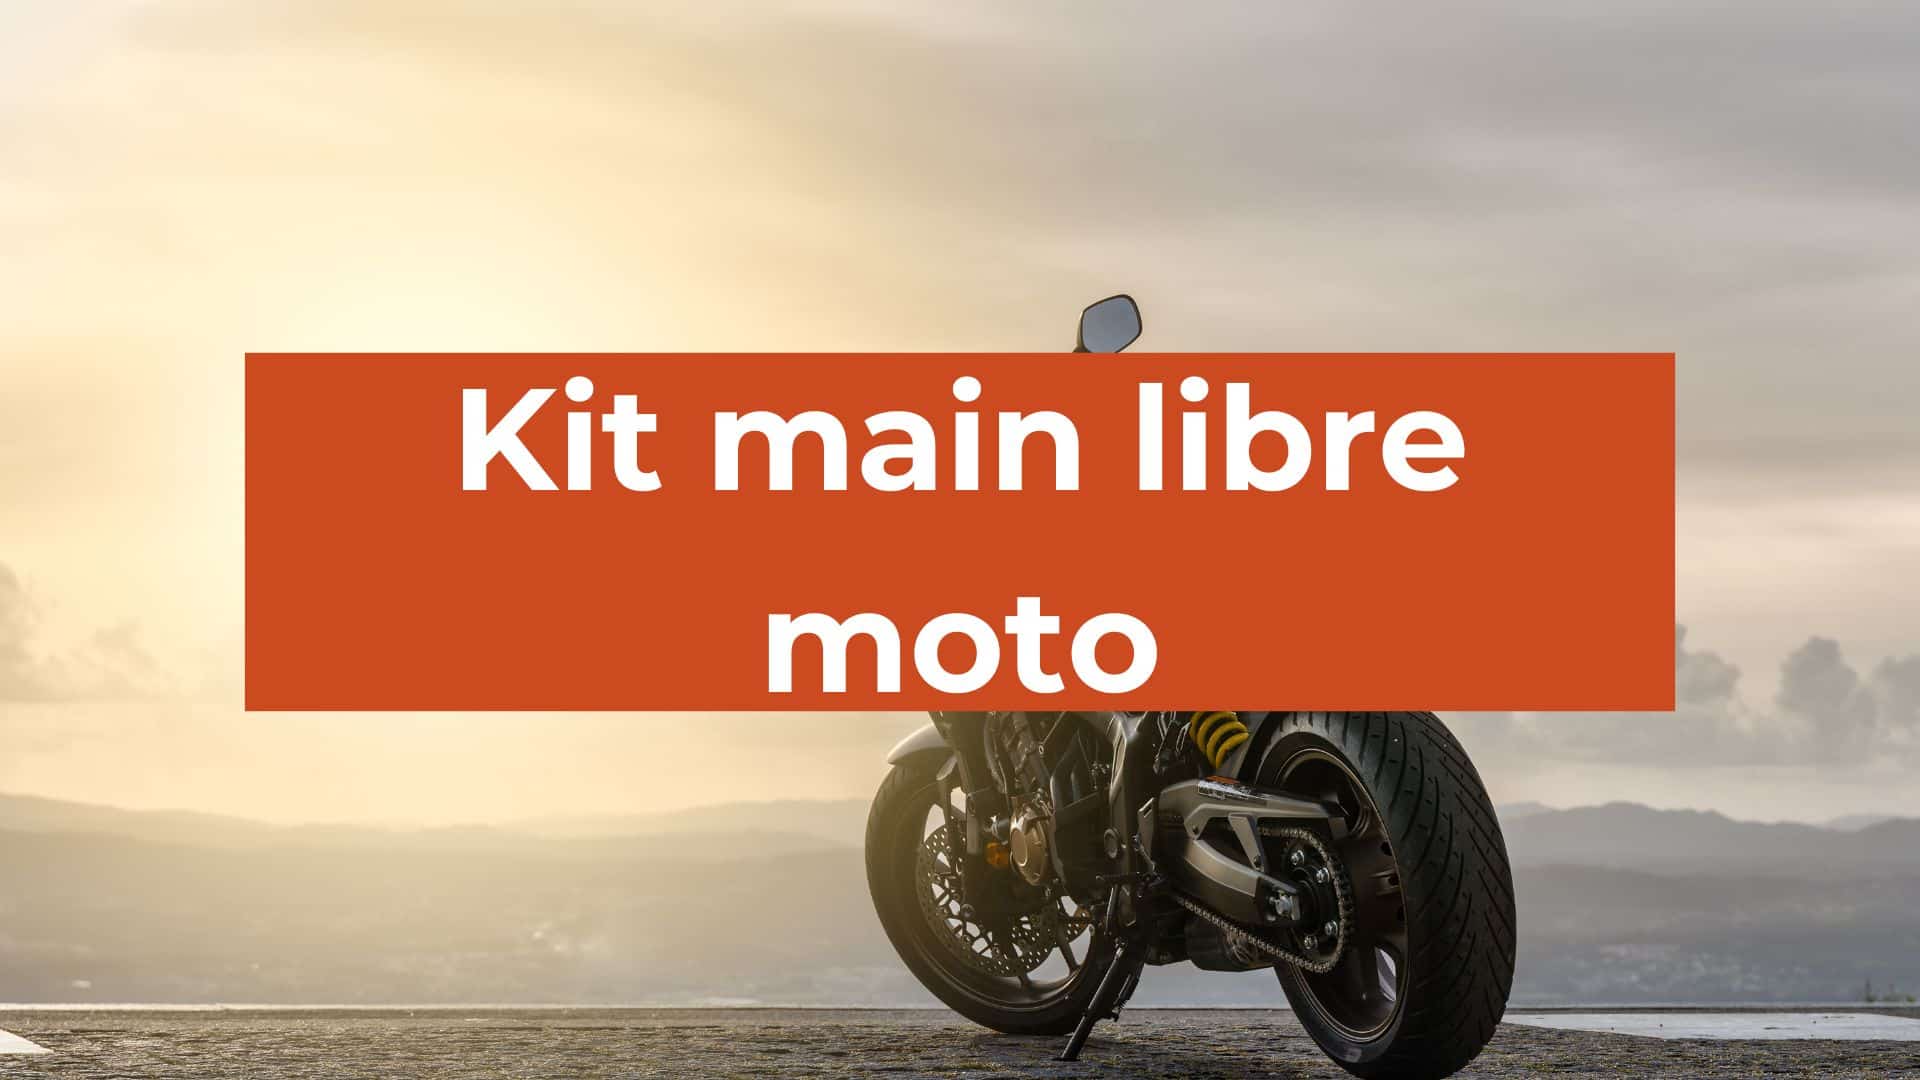 kit main libre moto